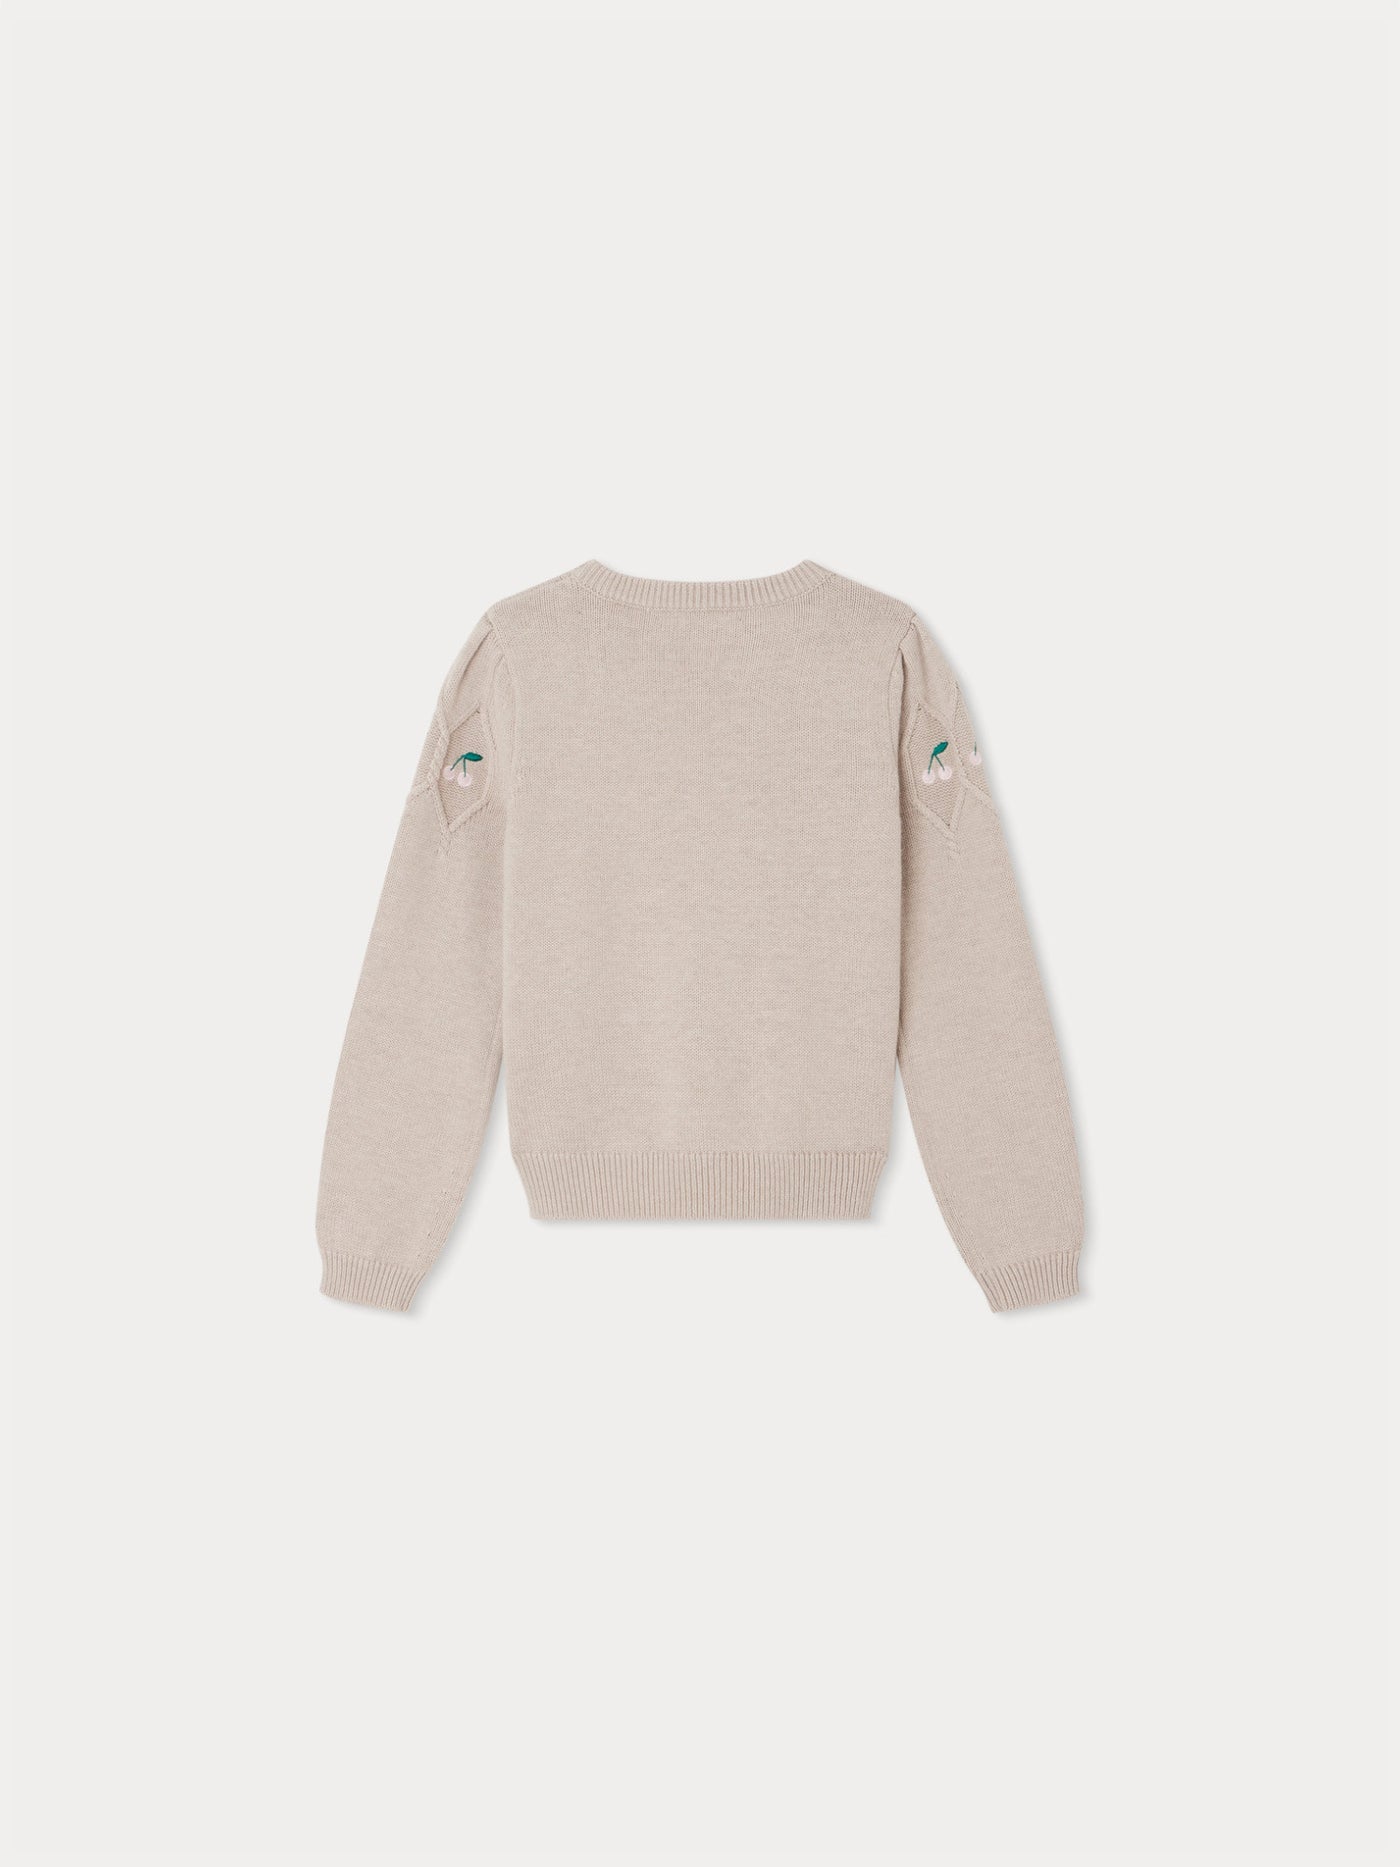 Dalphonza Sweater heathered gray